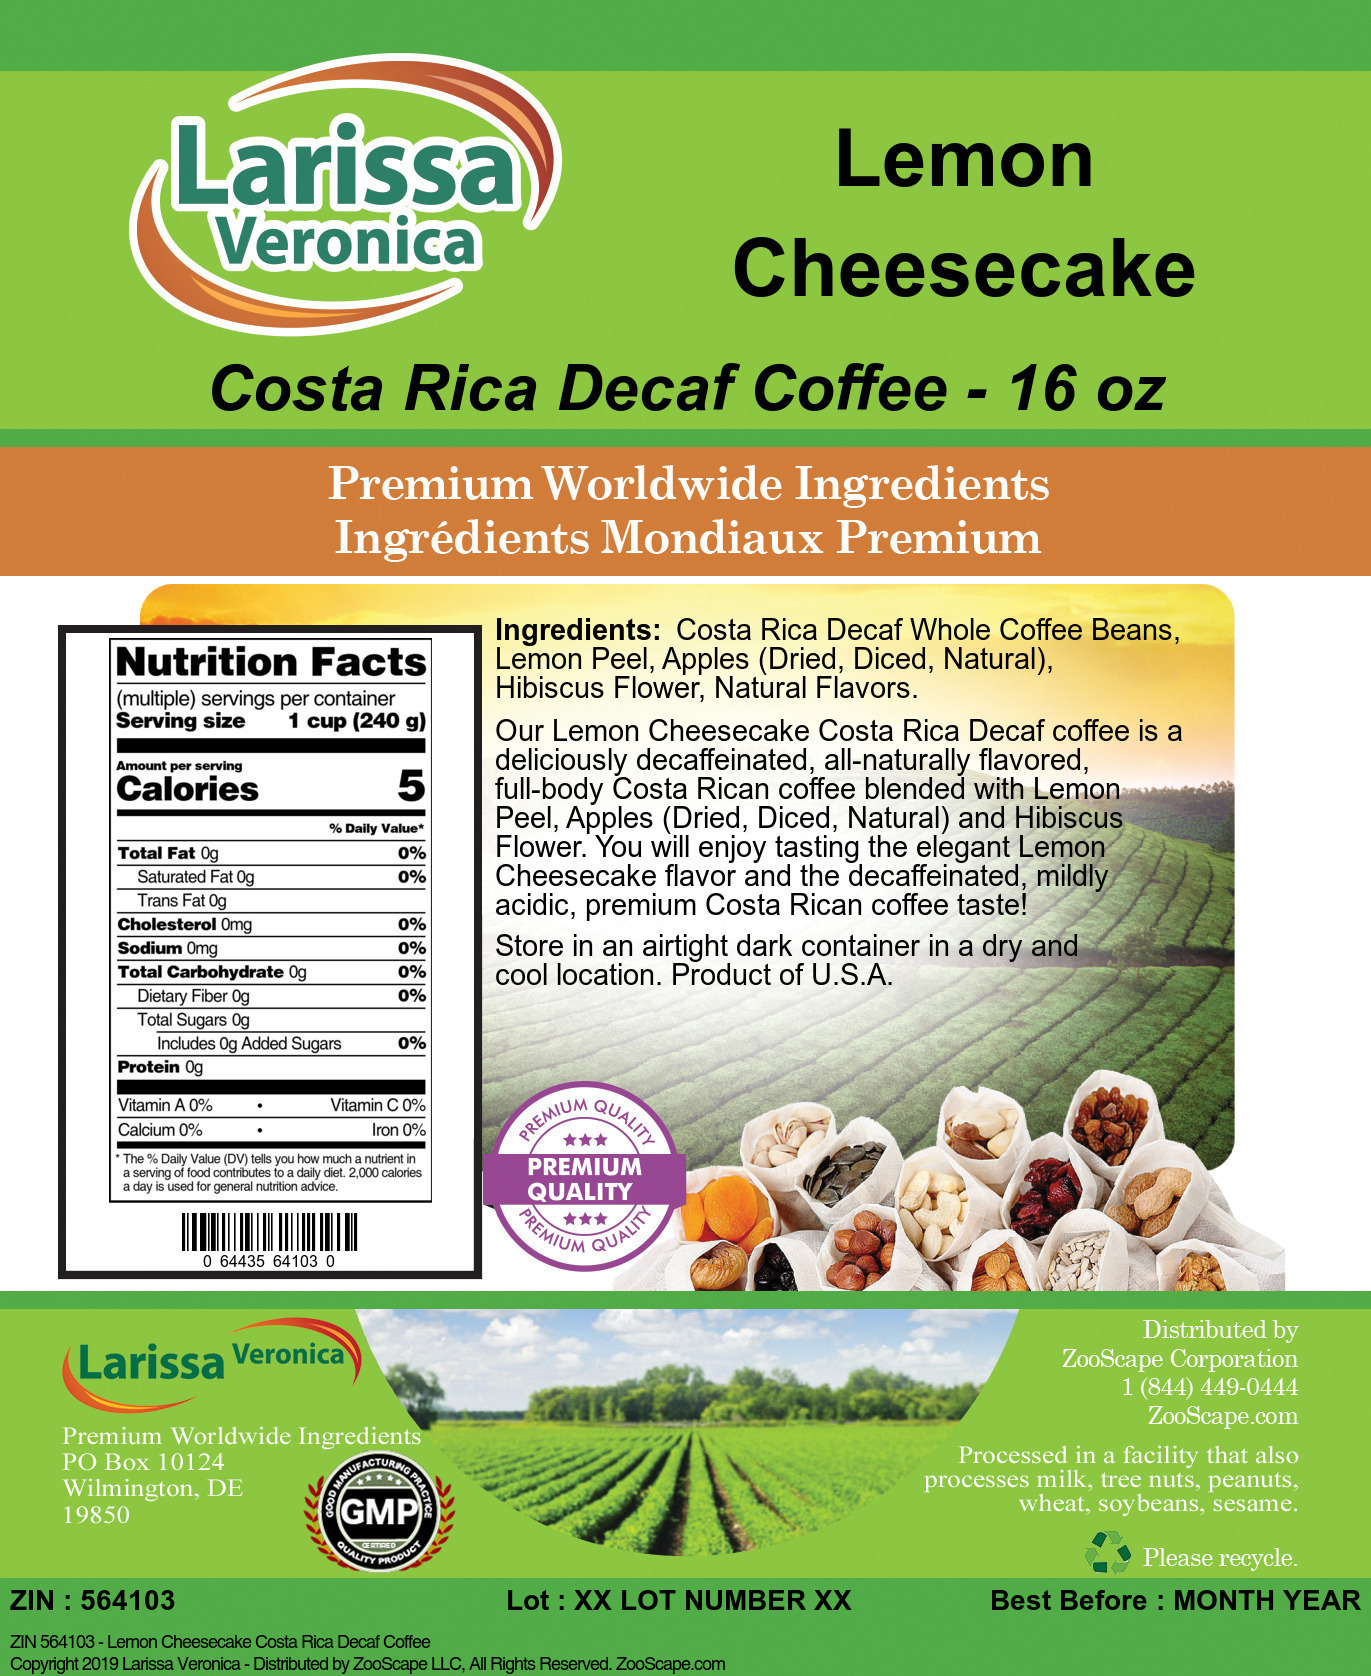 Lemon Cheesecake Costa Rica Decaf Coffee - Label